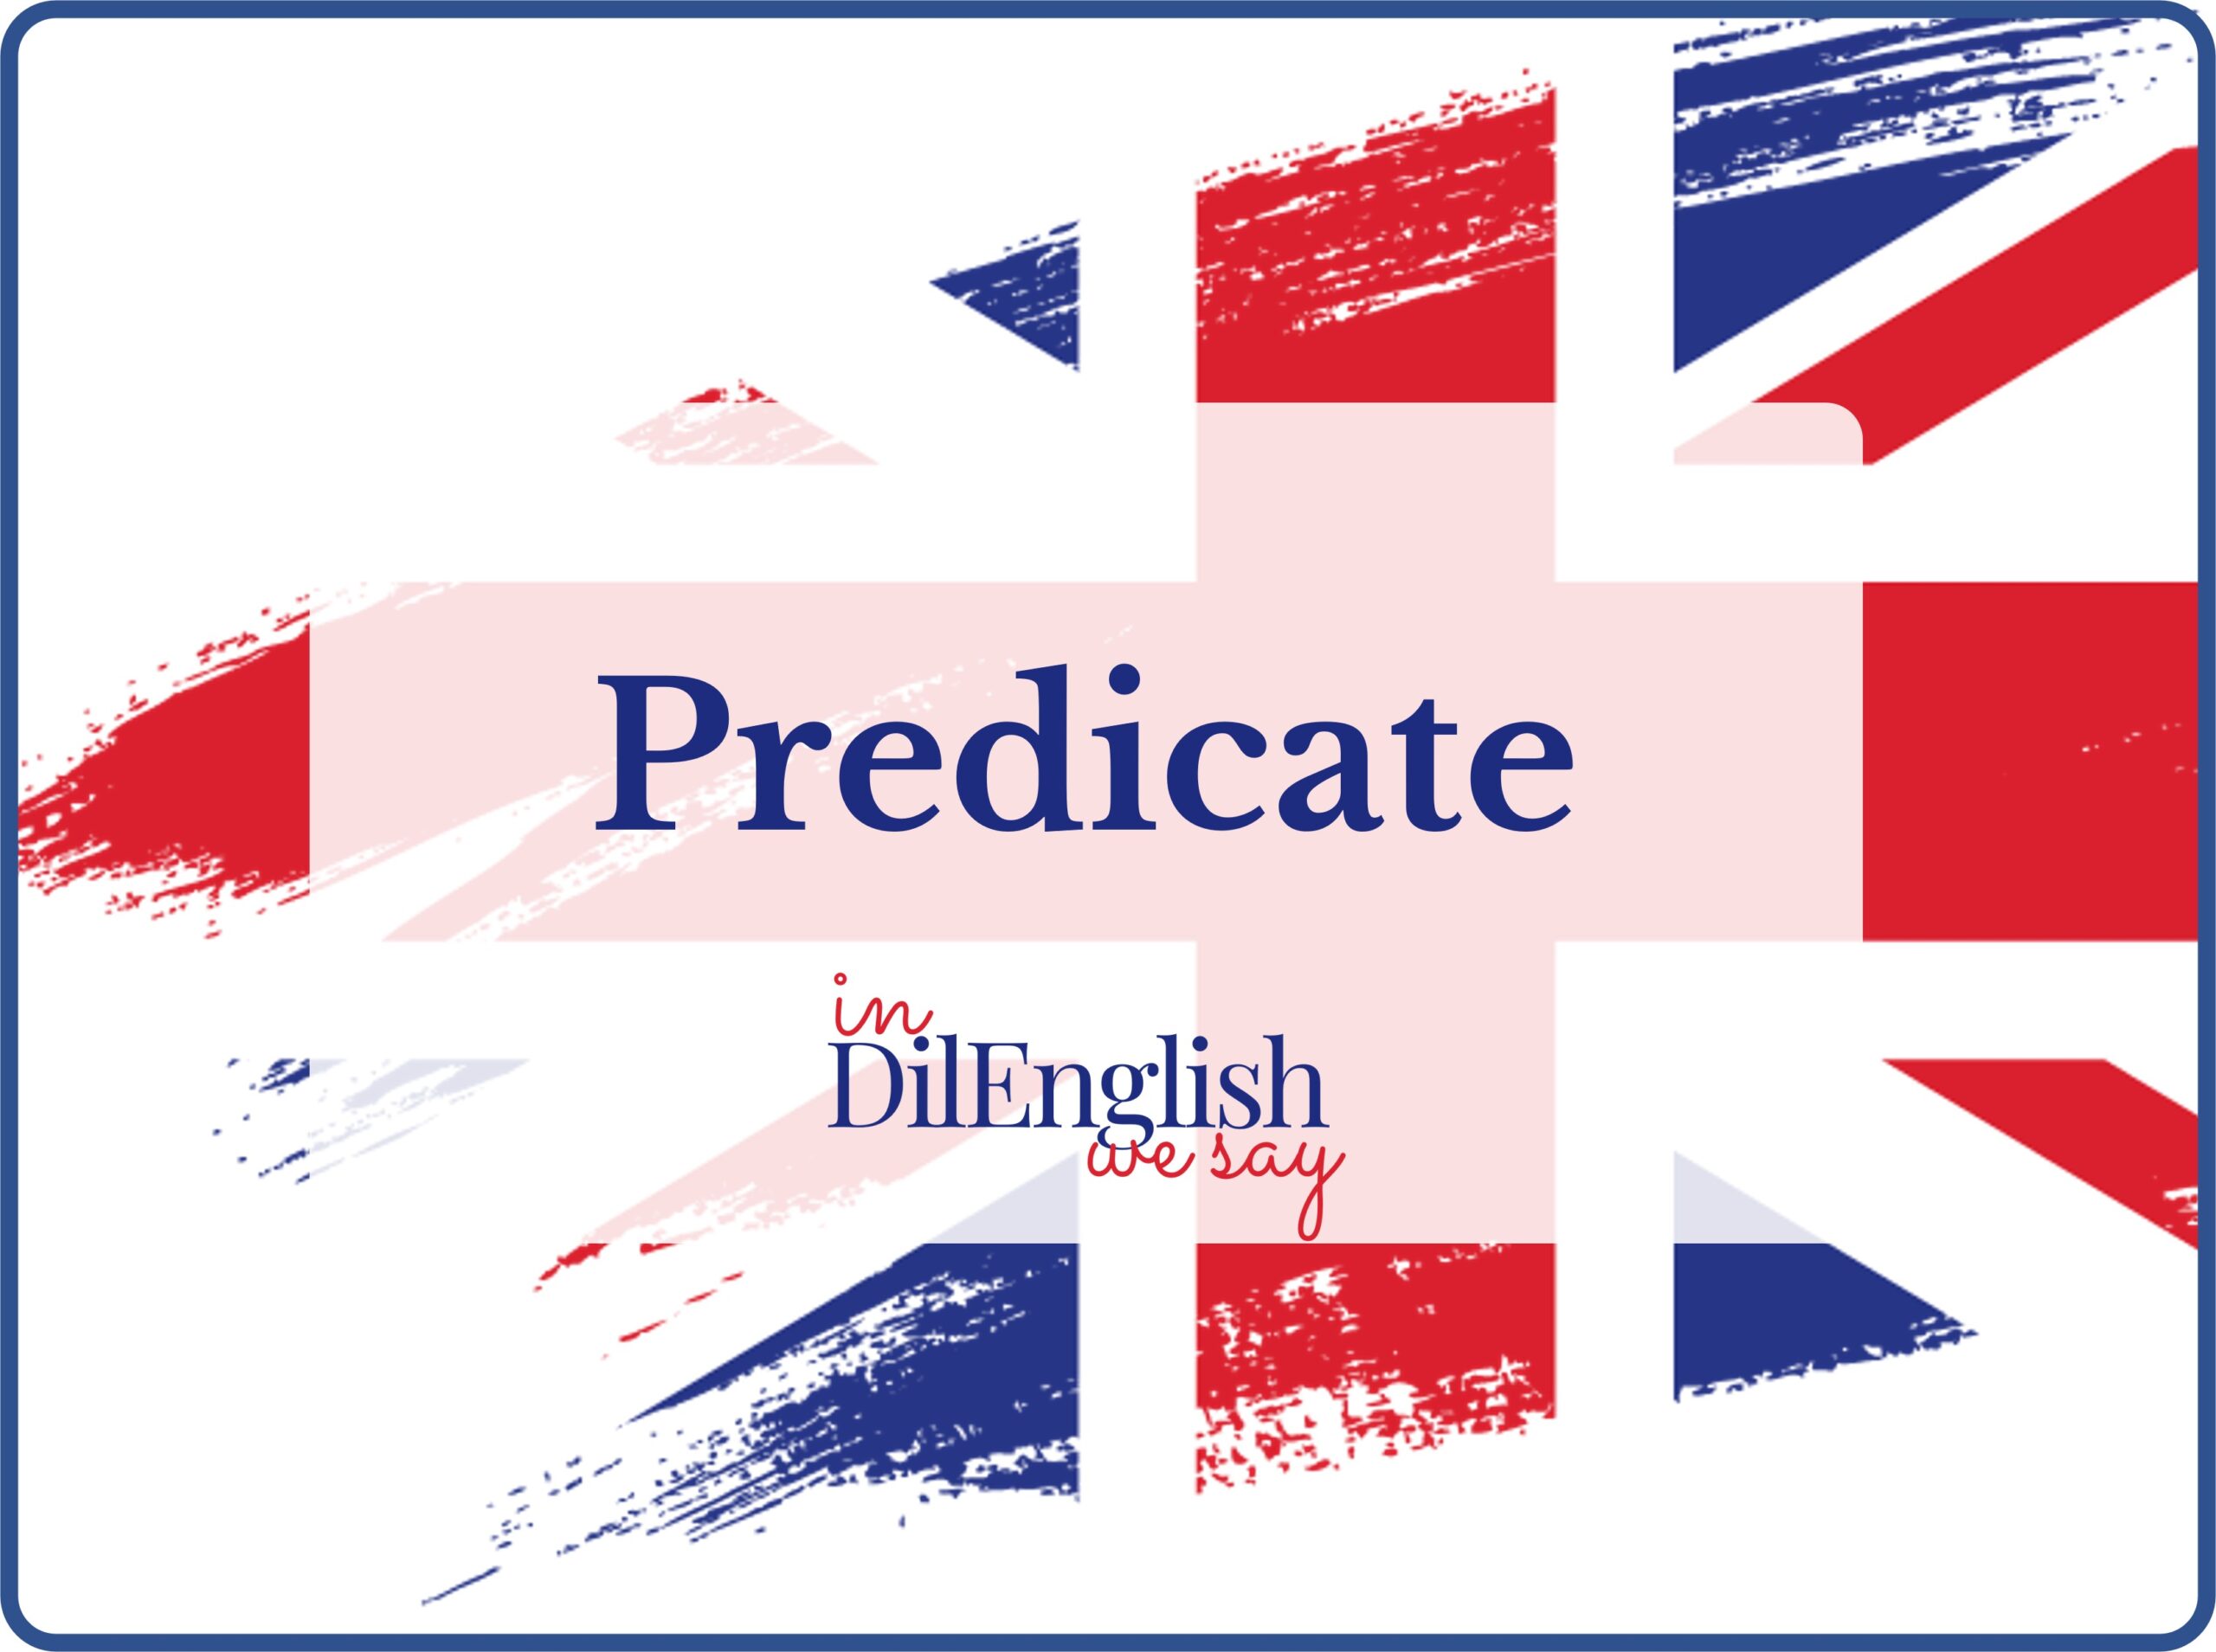 Predicate-English-Part-of-Sentence